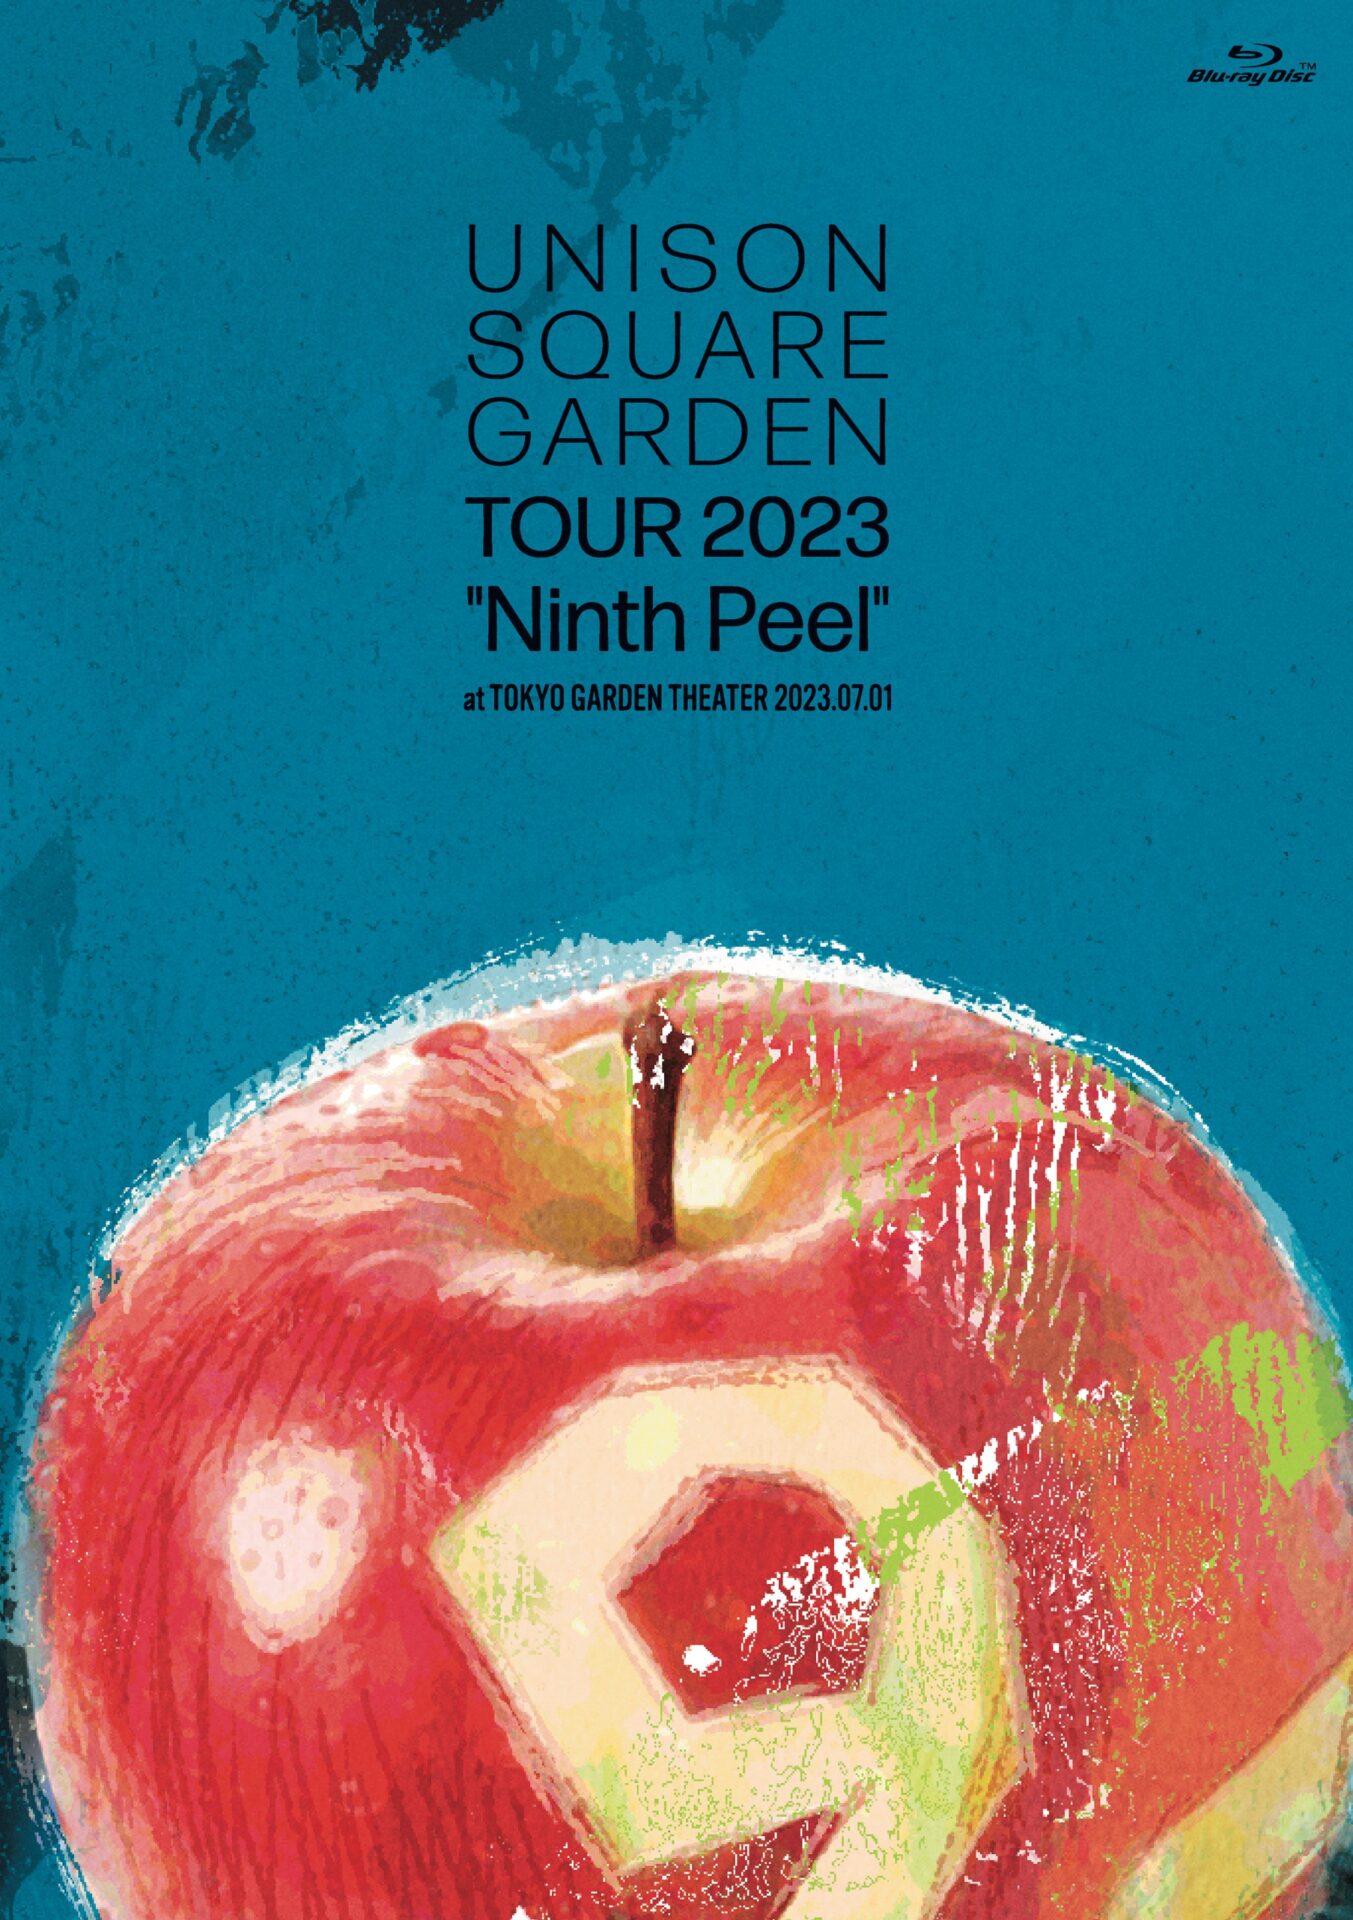 『UNISON SQUARE GARDEN TOUR 2023 “Ninth Peel” at TOKYO GARDEN THEATER 2023.07.01』ジャケット